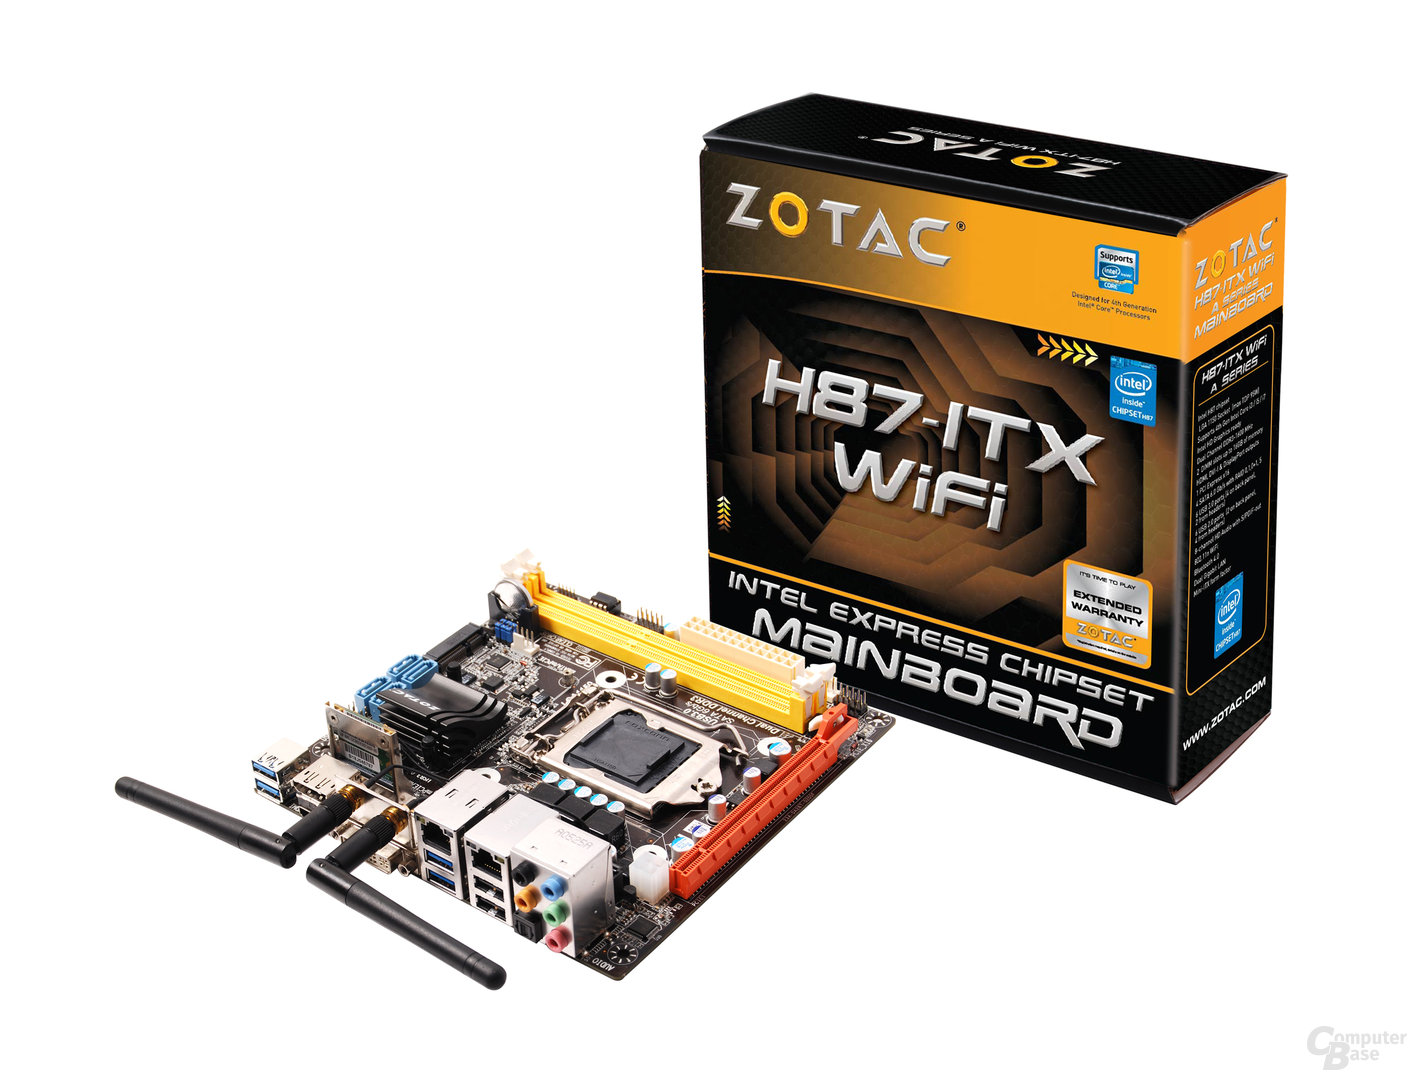 Zotac H87-ITX WiFi